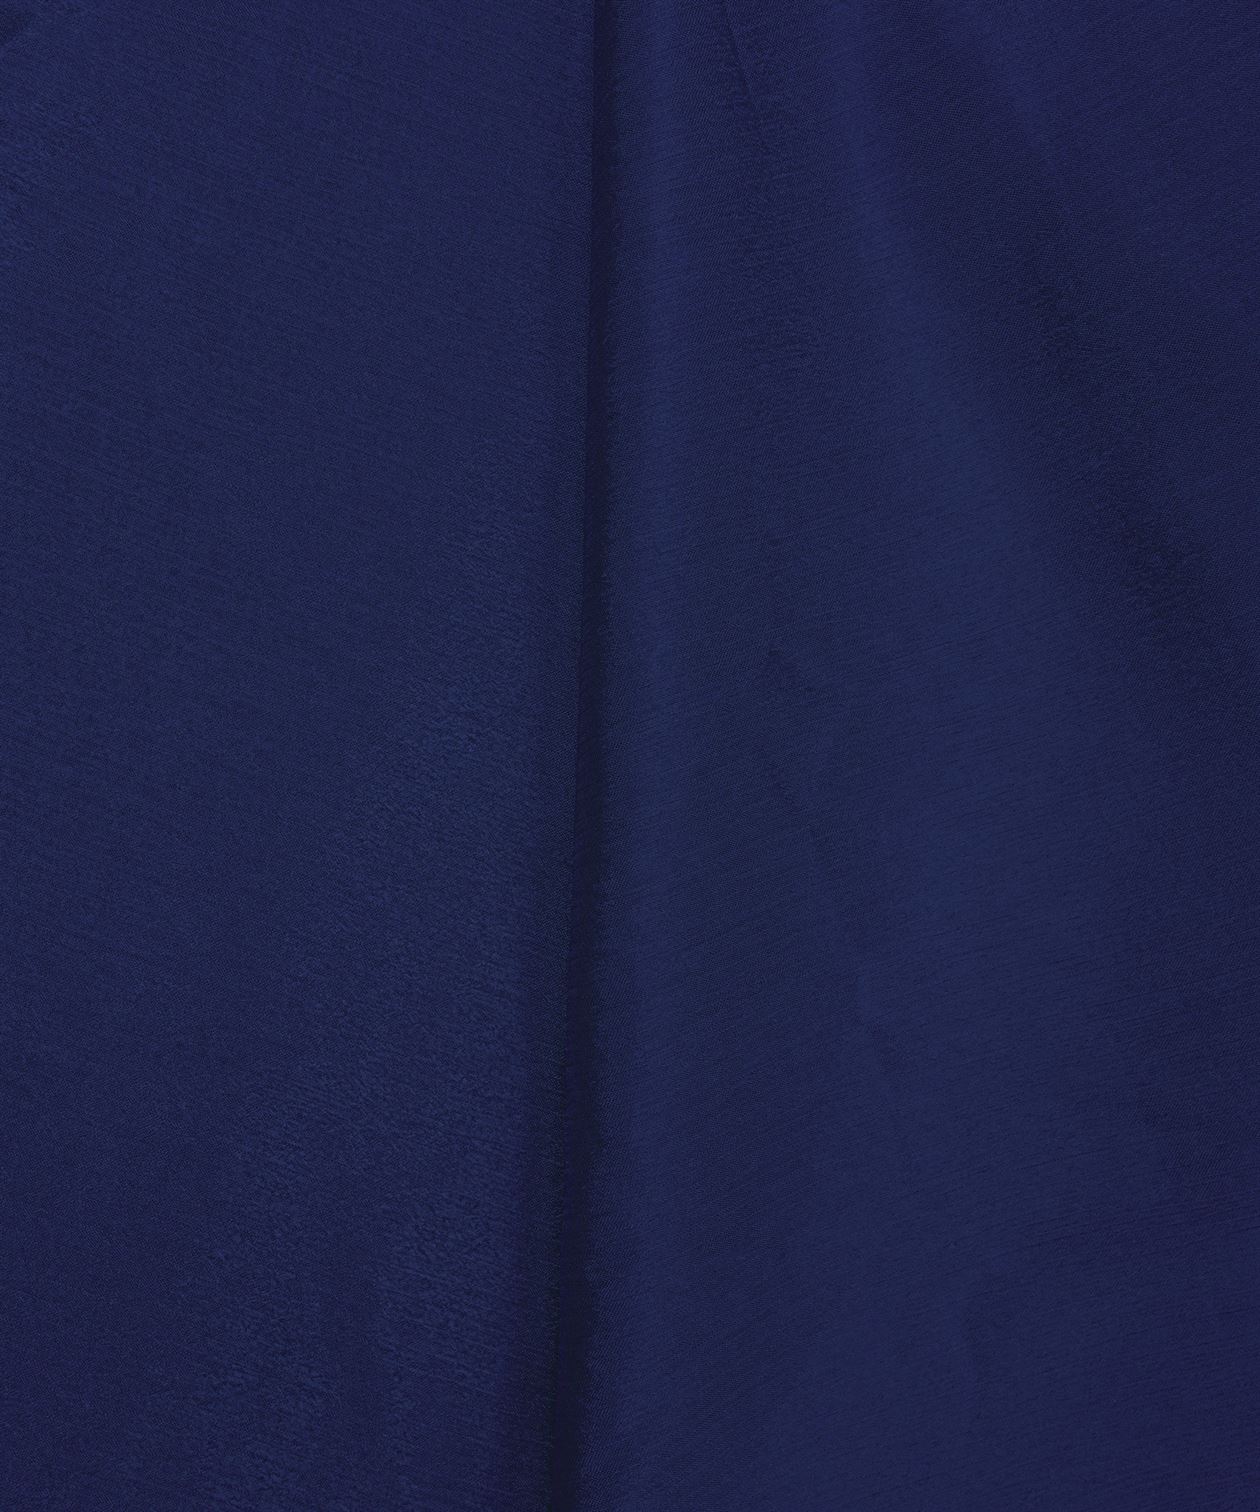 Navy Blue Plain Dyed Bright Chiffon Fabric